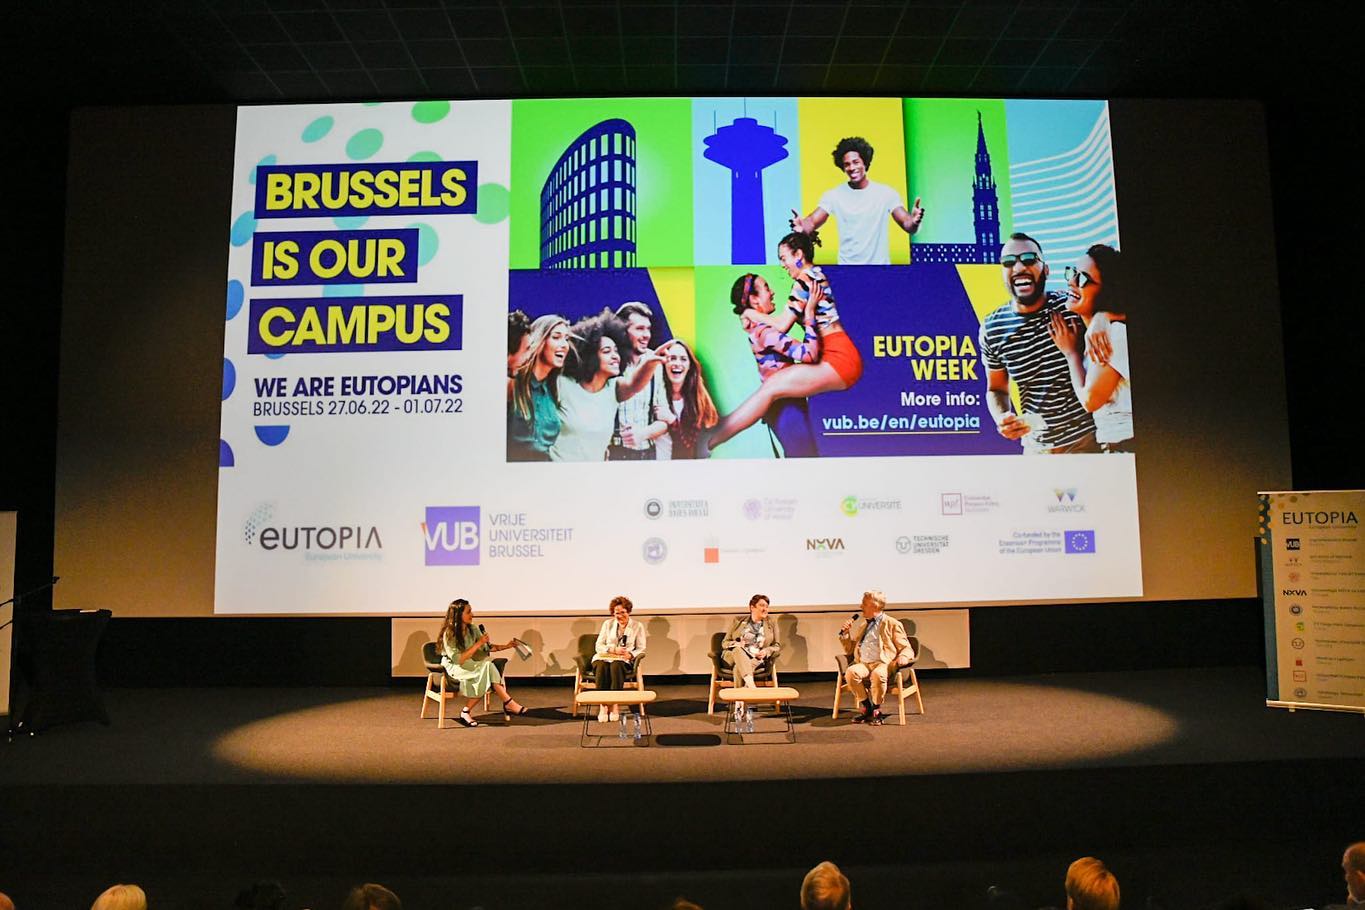 EUTOPIA WEEK: Brussels is our campus, too